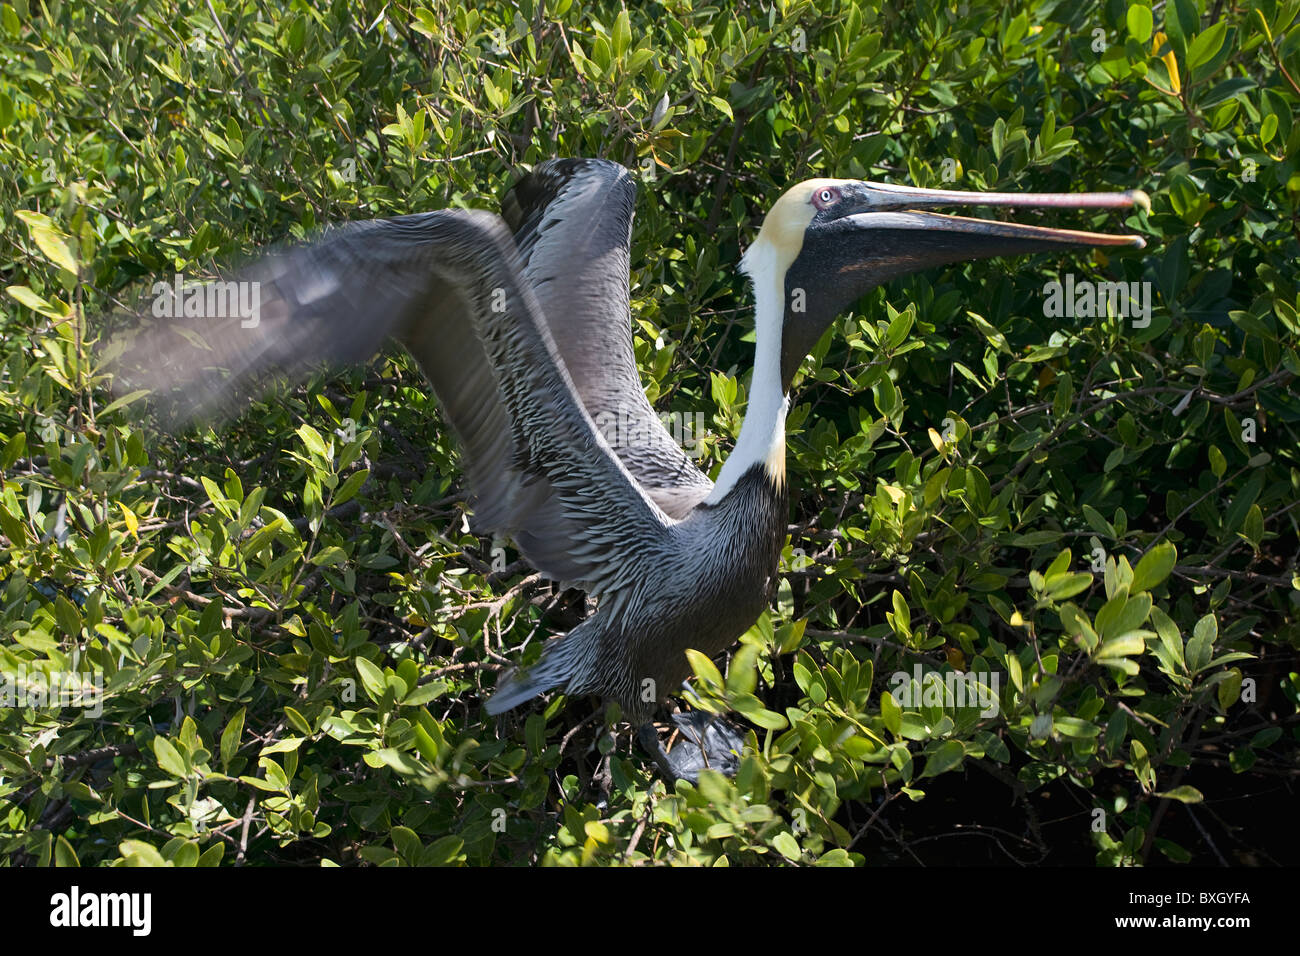 Brown Pelican takes flight from tree branches, Islamorada, Florida Keys, USA Stock Photo